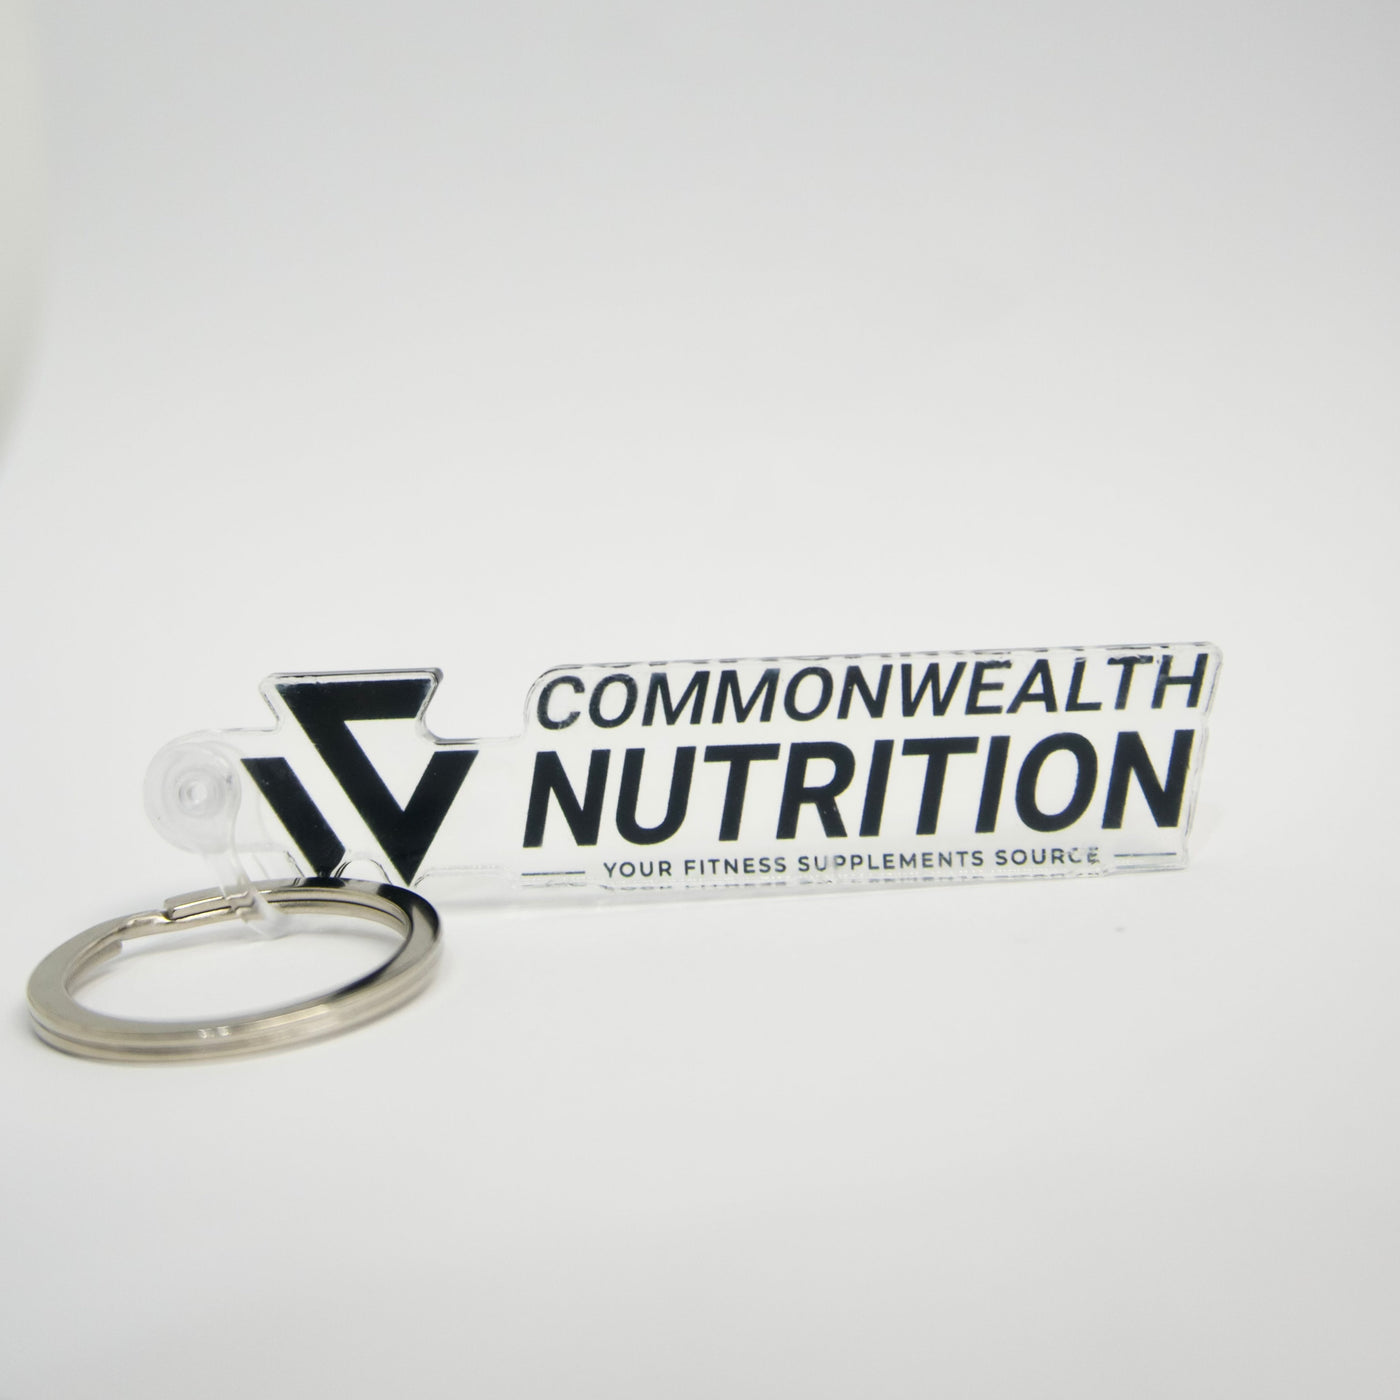 Commonwealth Nutrition Keychain